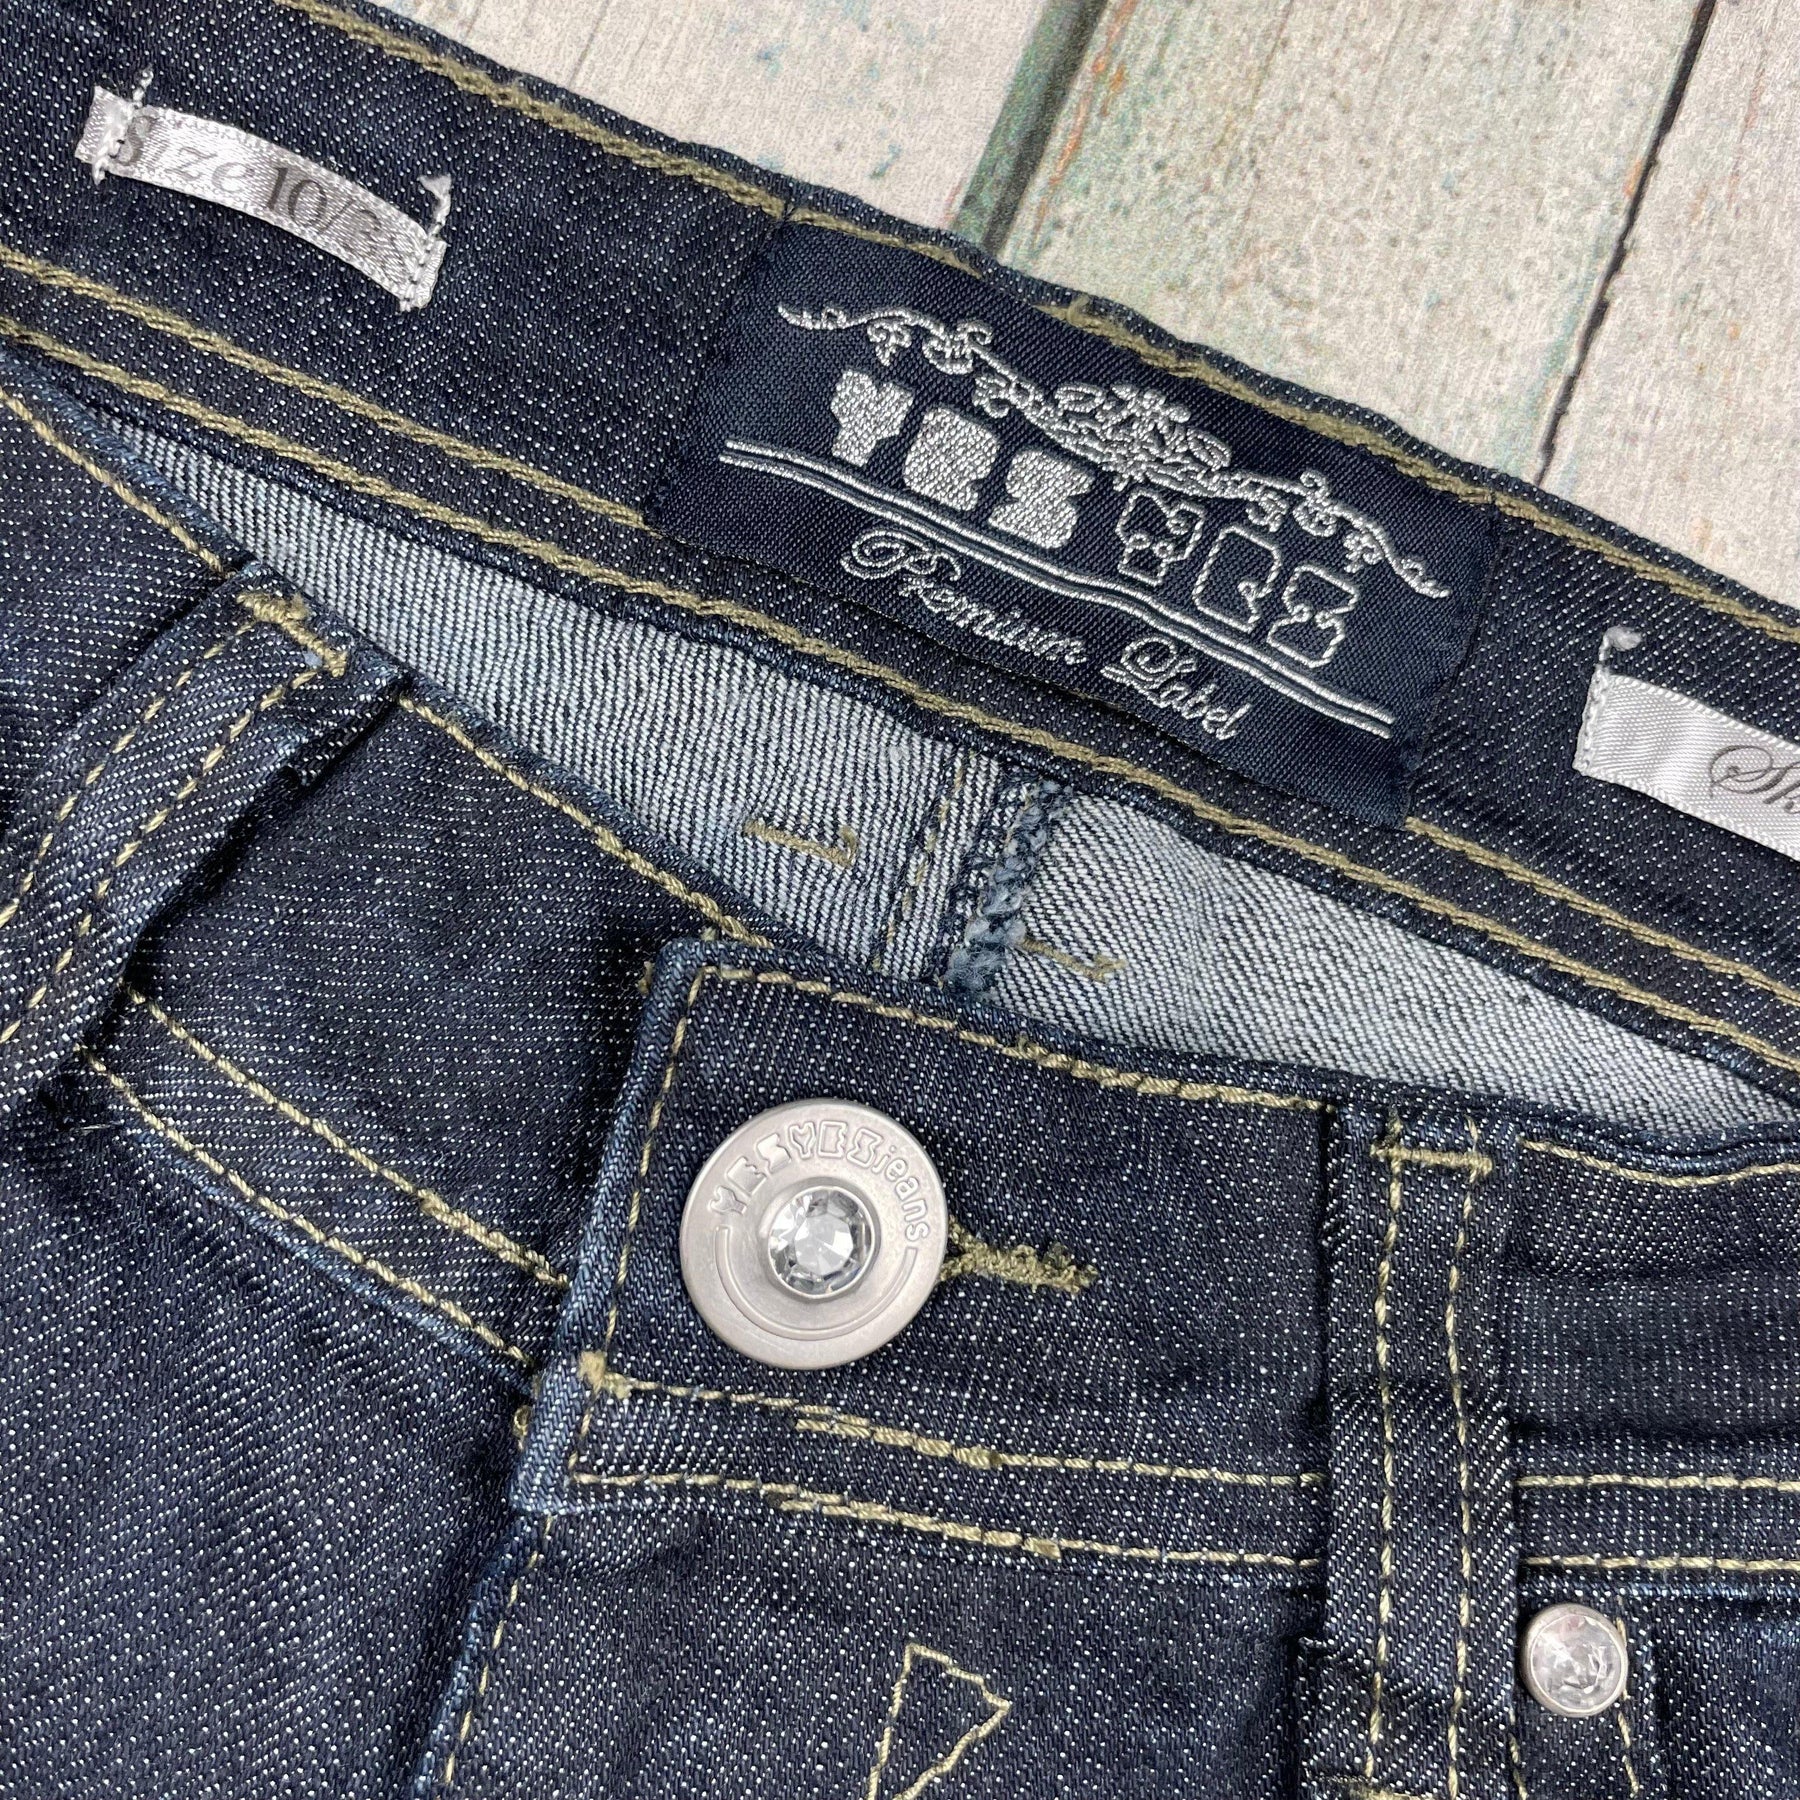 Rhinestone Jeans -  UK